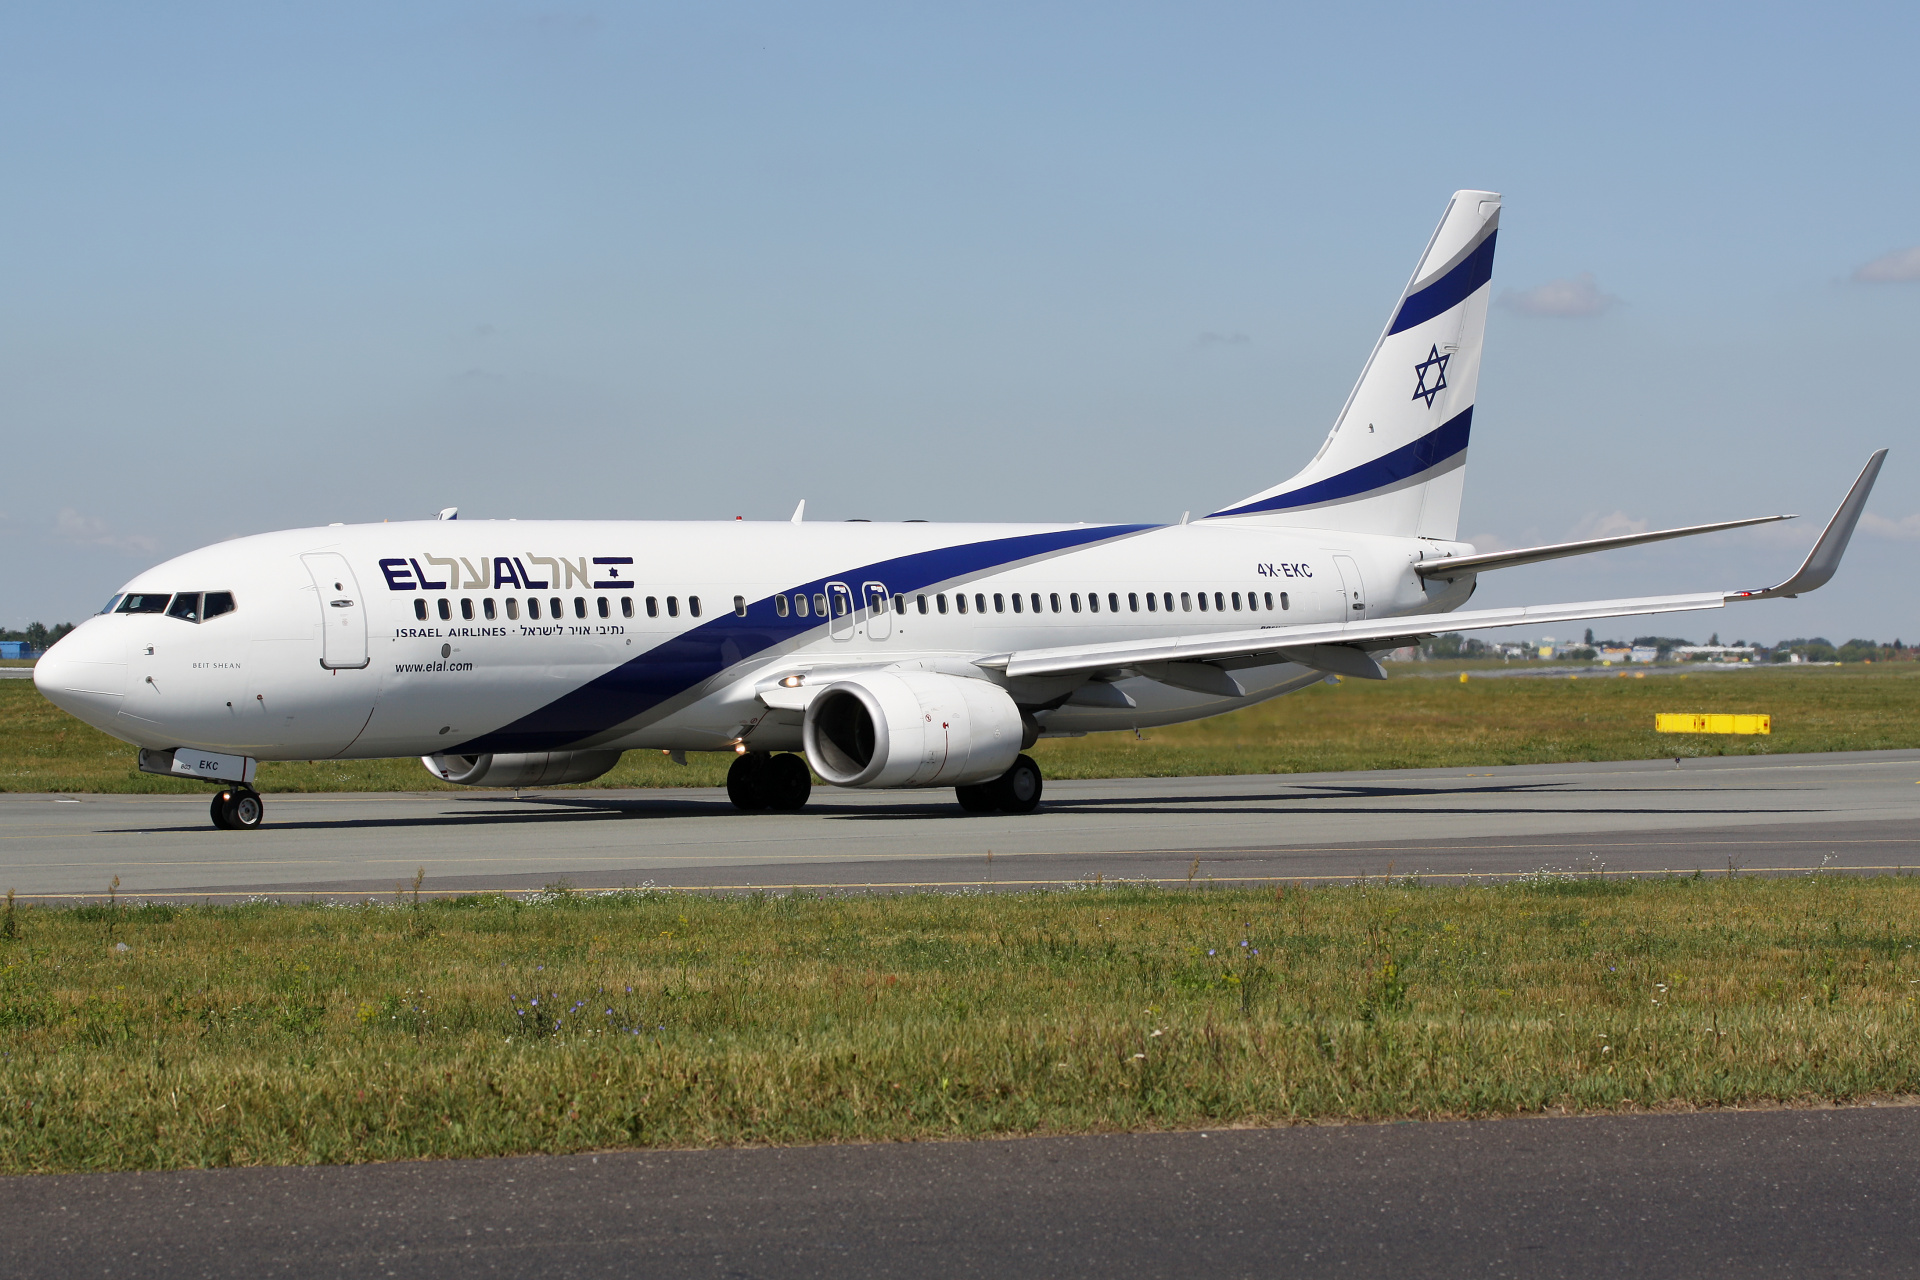 4X-EKC (winglets) (Aircraft » EPWA Spotting » Boeing 737-800 » El Al Israel Airlines)